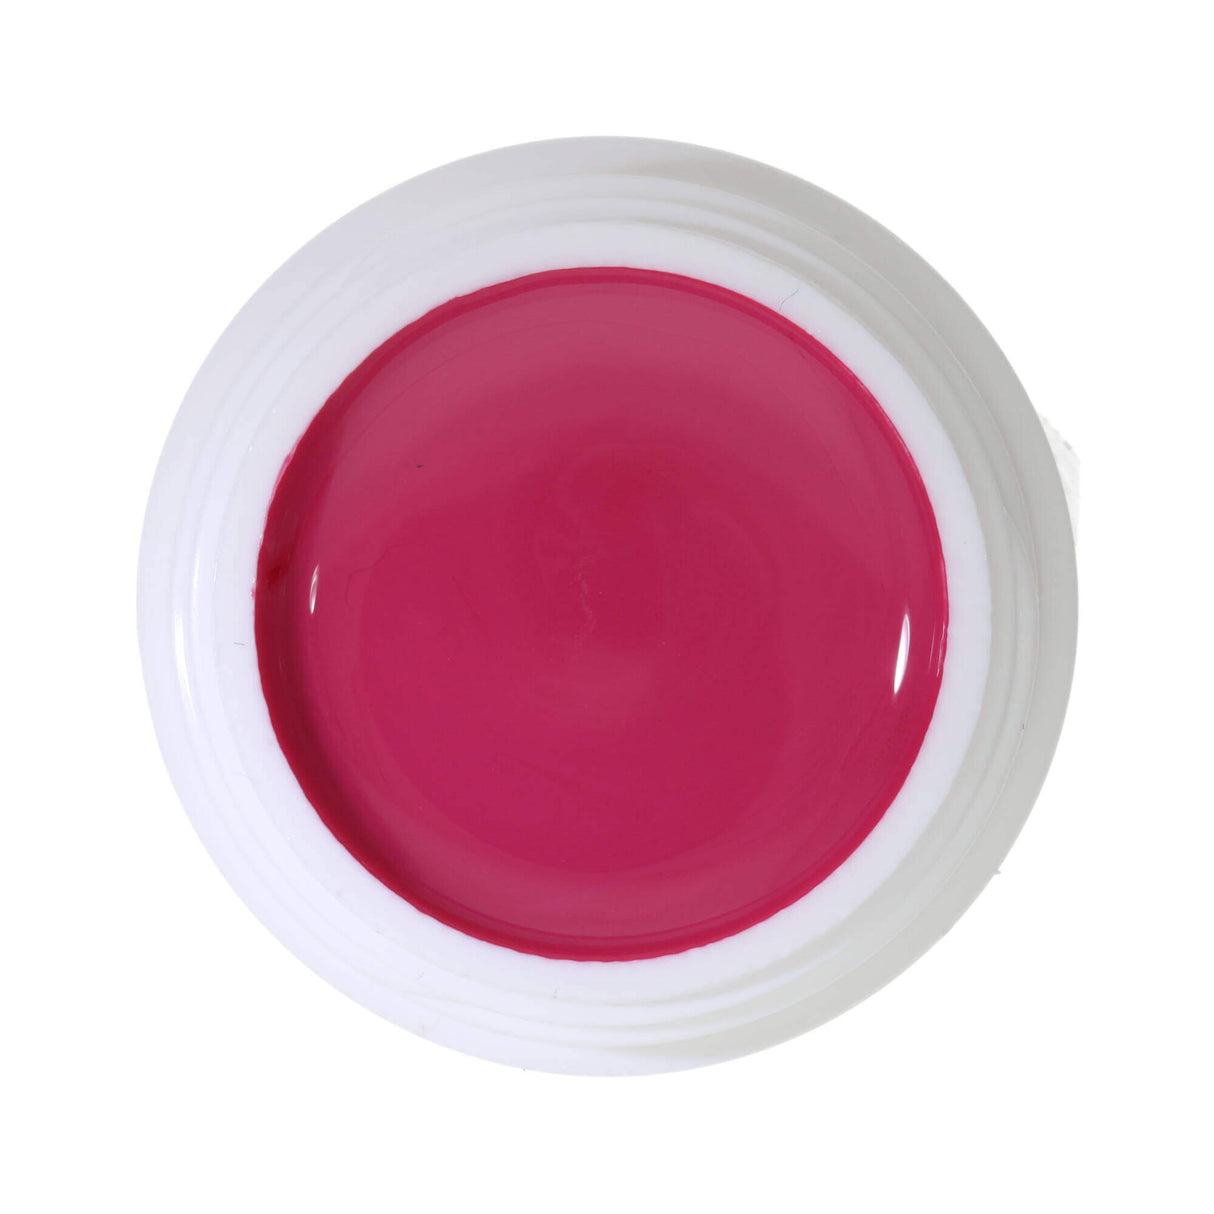 # 344 Premium-PURE Color Gel 5ml màu hồng fuchsia đậm